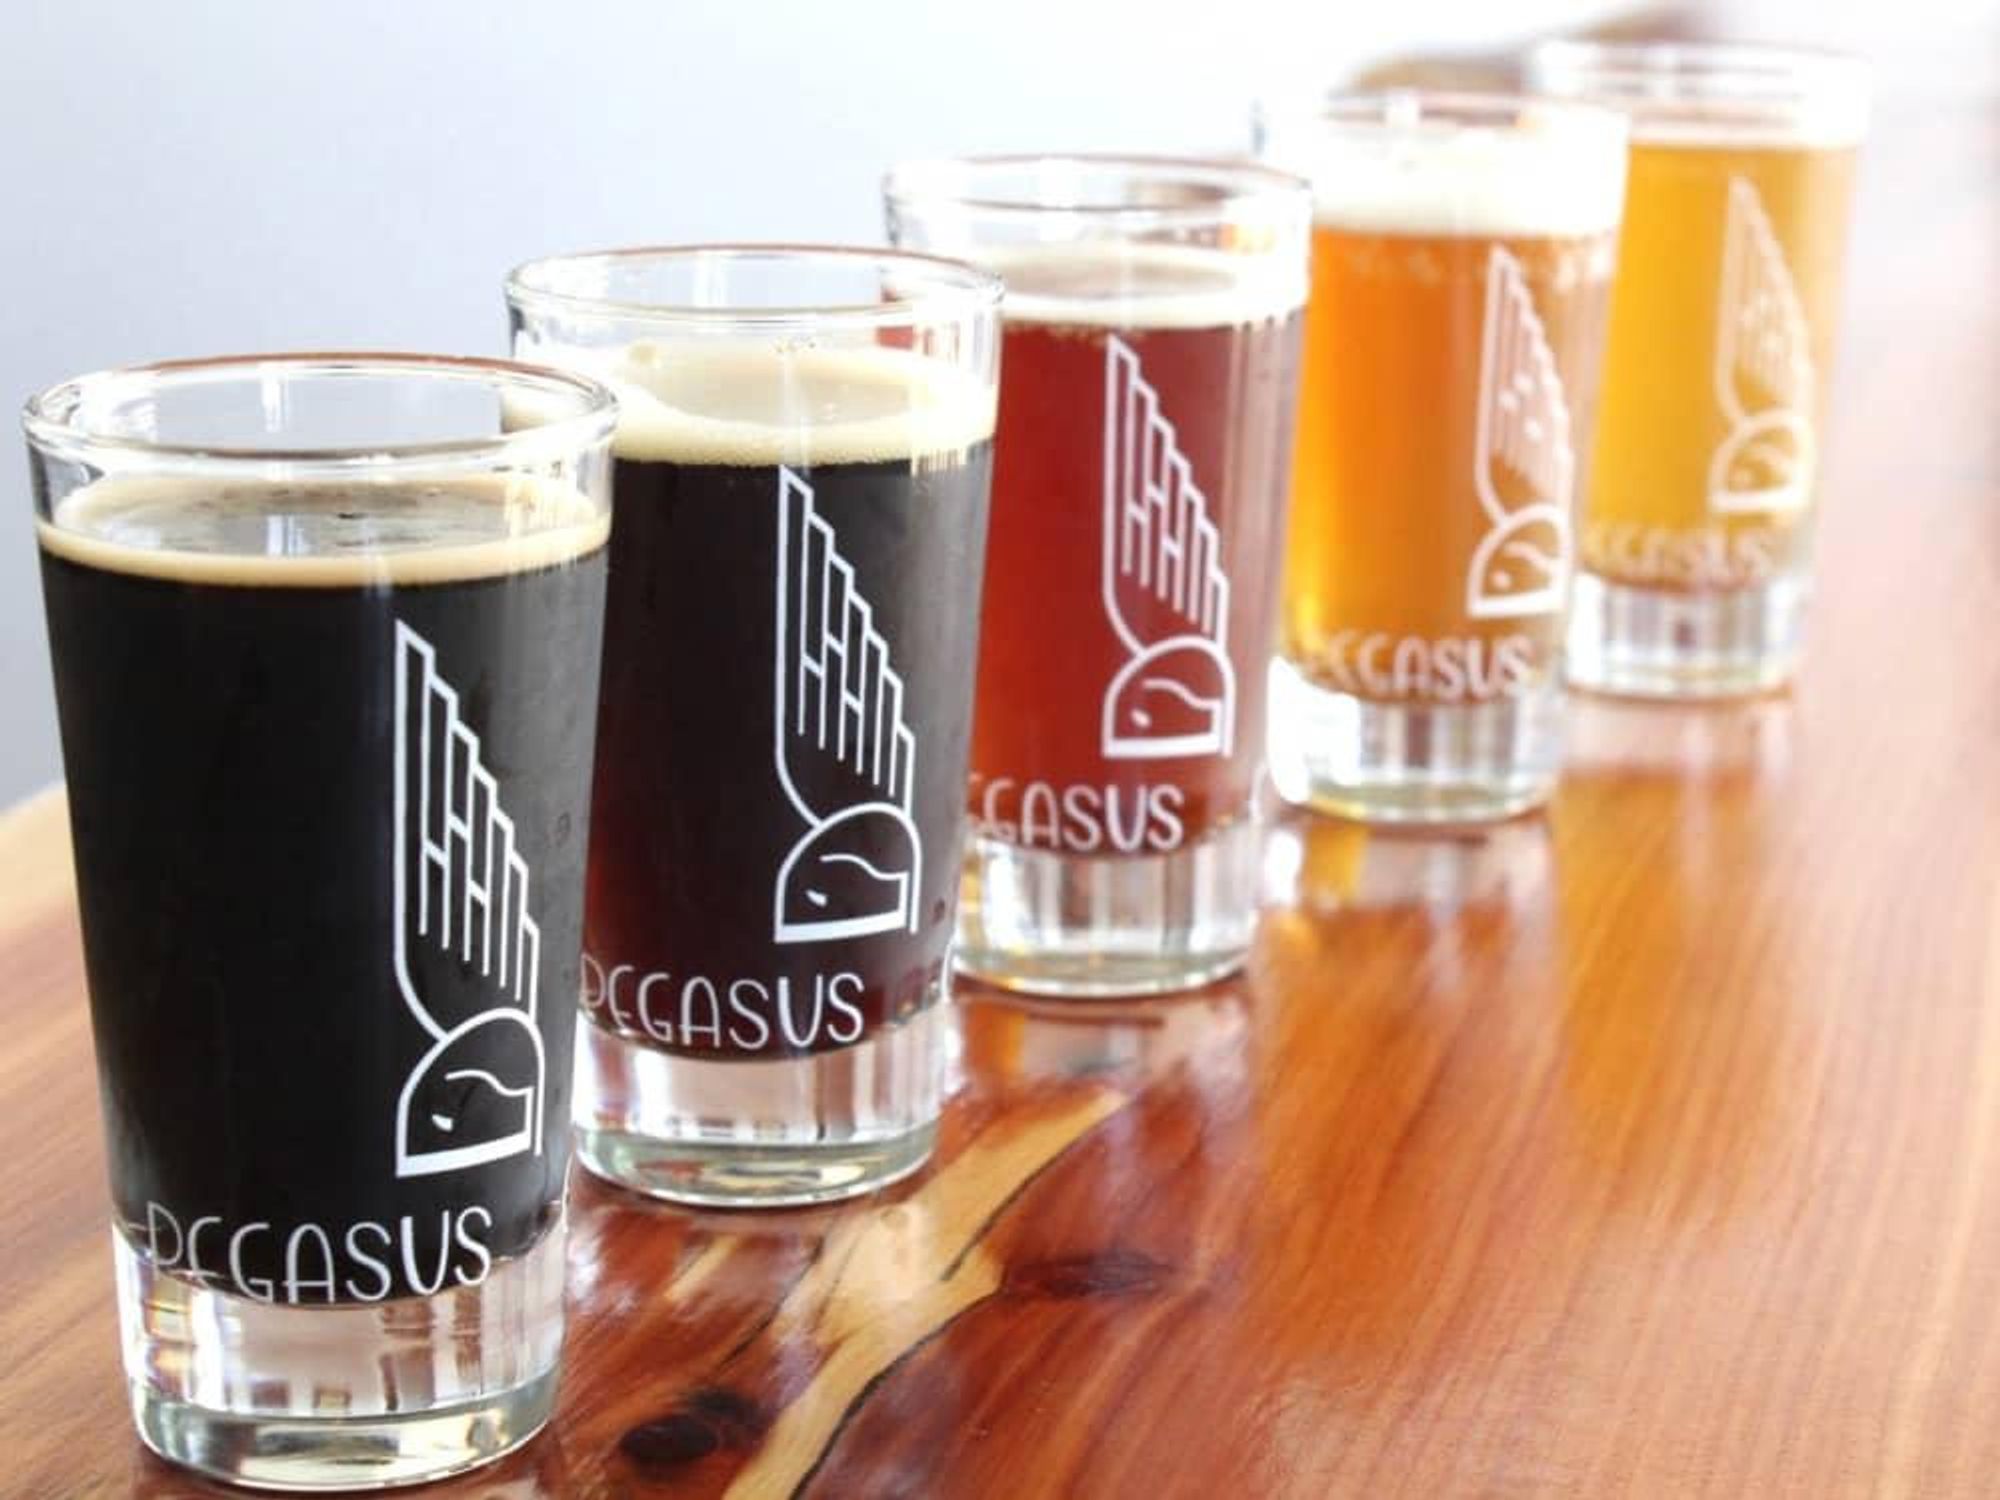 Pegasus City Brewery